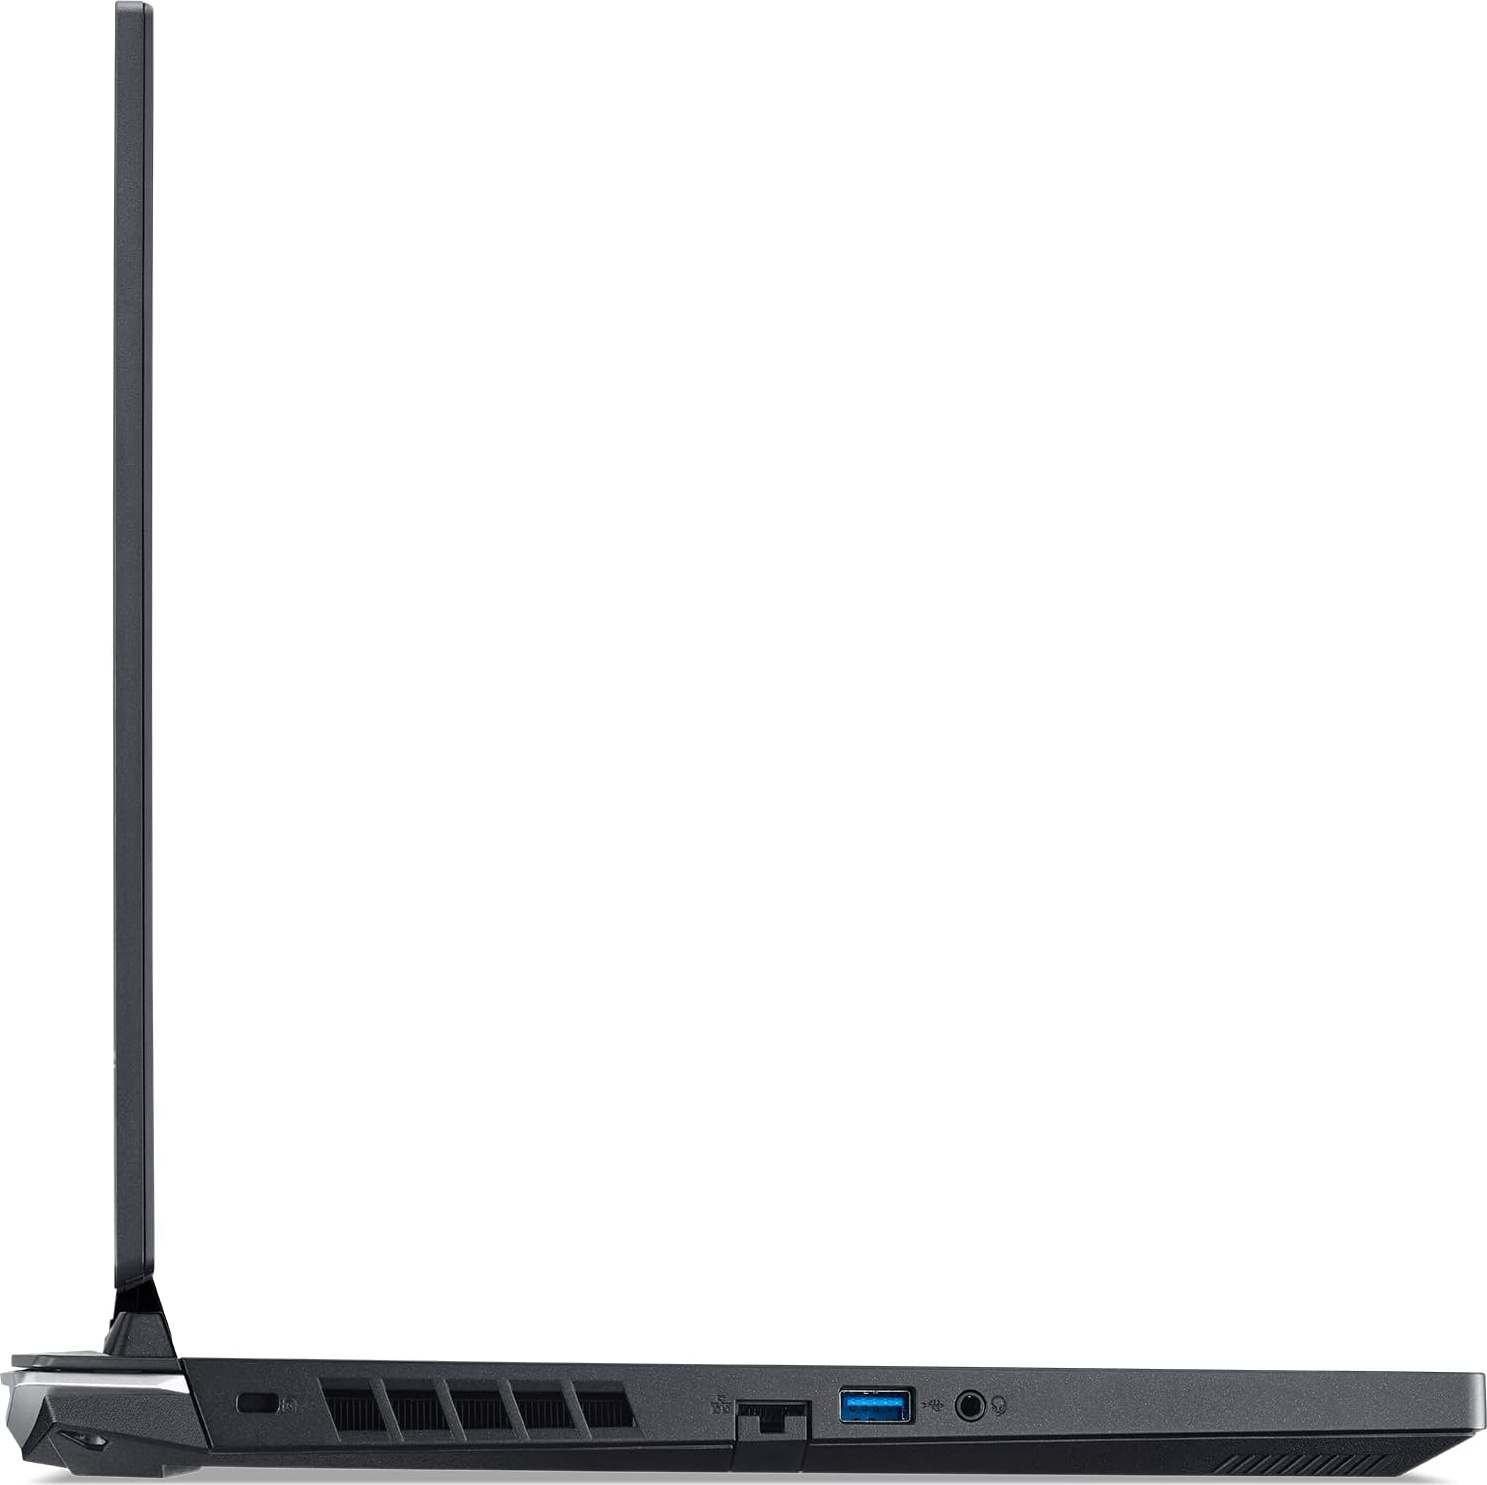 Acer Nitro 5 AN515-58-57Y8 Gaming Laptop | Intel Core i5-12500H | NVIDIA GeForce RTX 3050 Ti Laptop GPU | 15.6" FHD 144Hz IPS Display | 16GB DDR4 | 512GB Gen 4 SSD | Killer Wi-Fi 6 | Backlit Keyboard